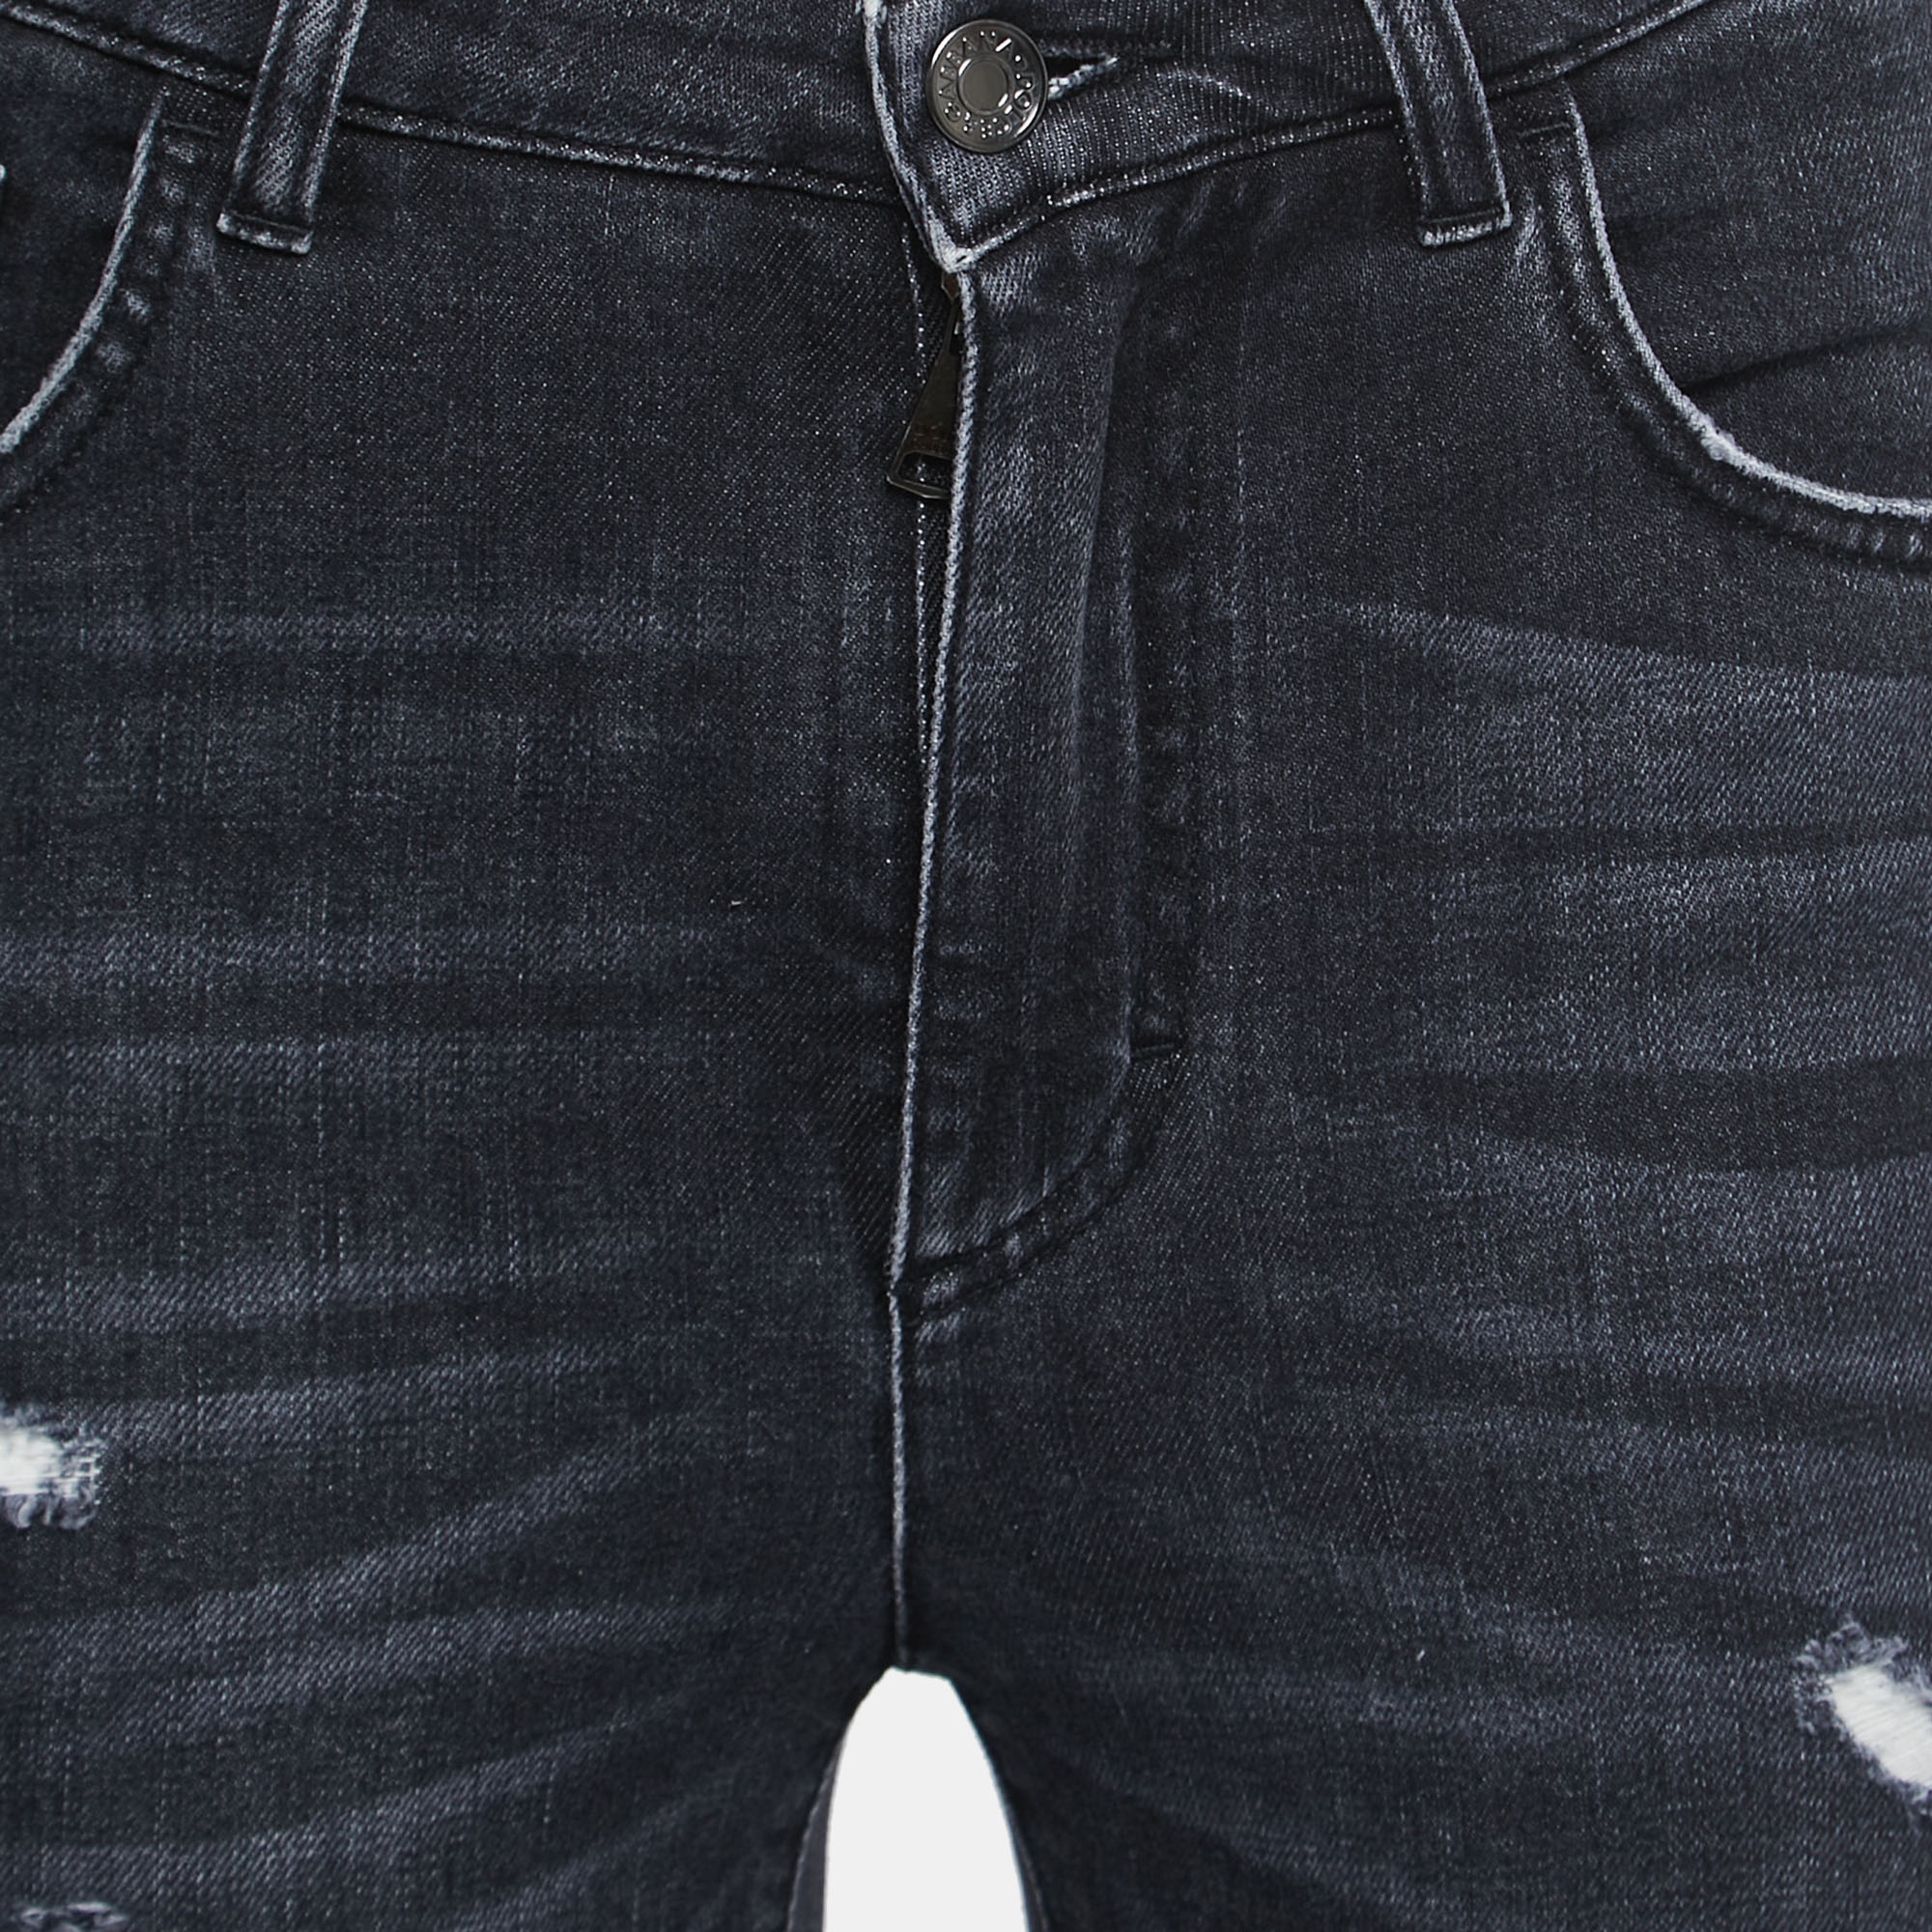 Dolce & Gabbana Charcoal Grey Distressed Denim Frayed Skinny Jeans S